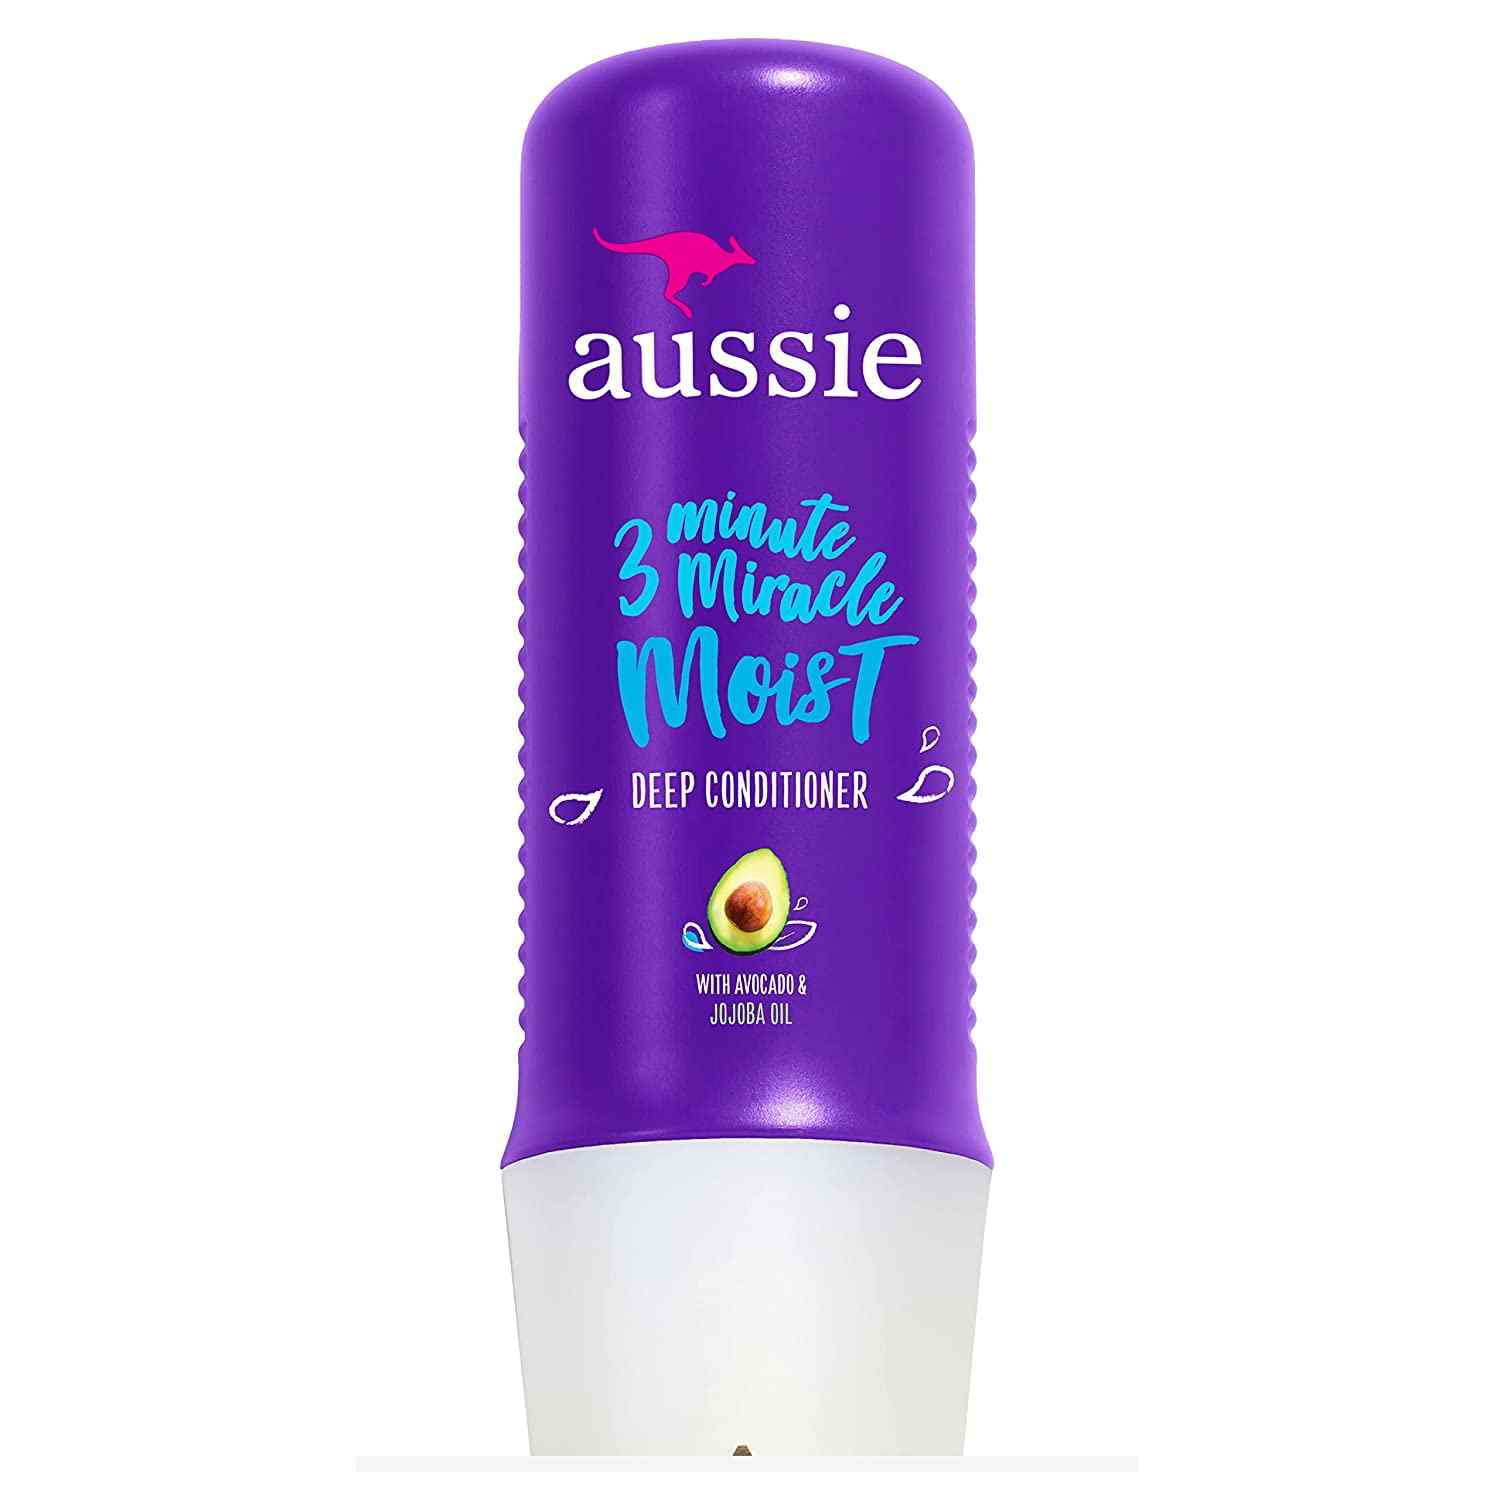 Aussie 3 Minute Miracle Moist Deep Conditioner